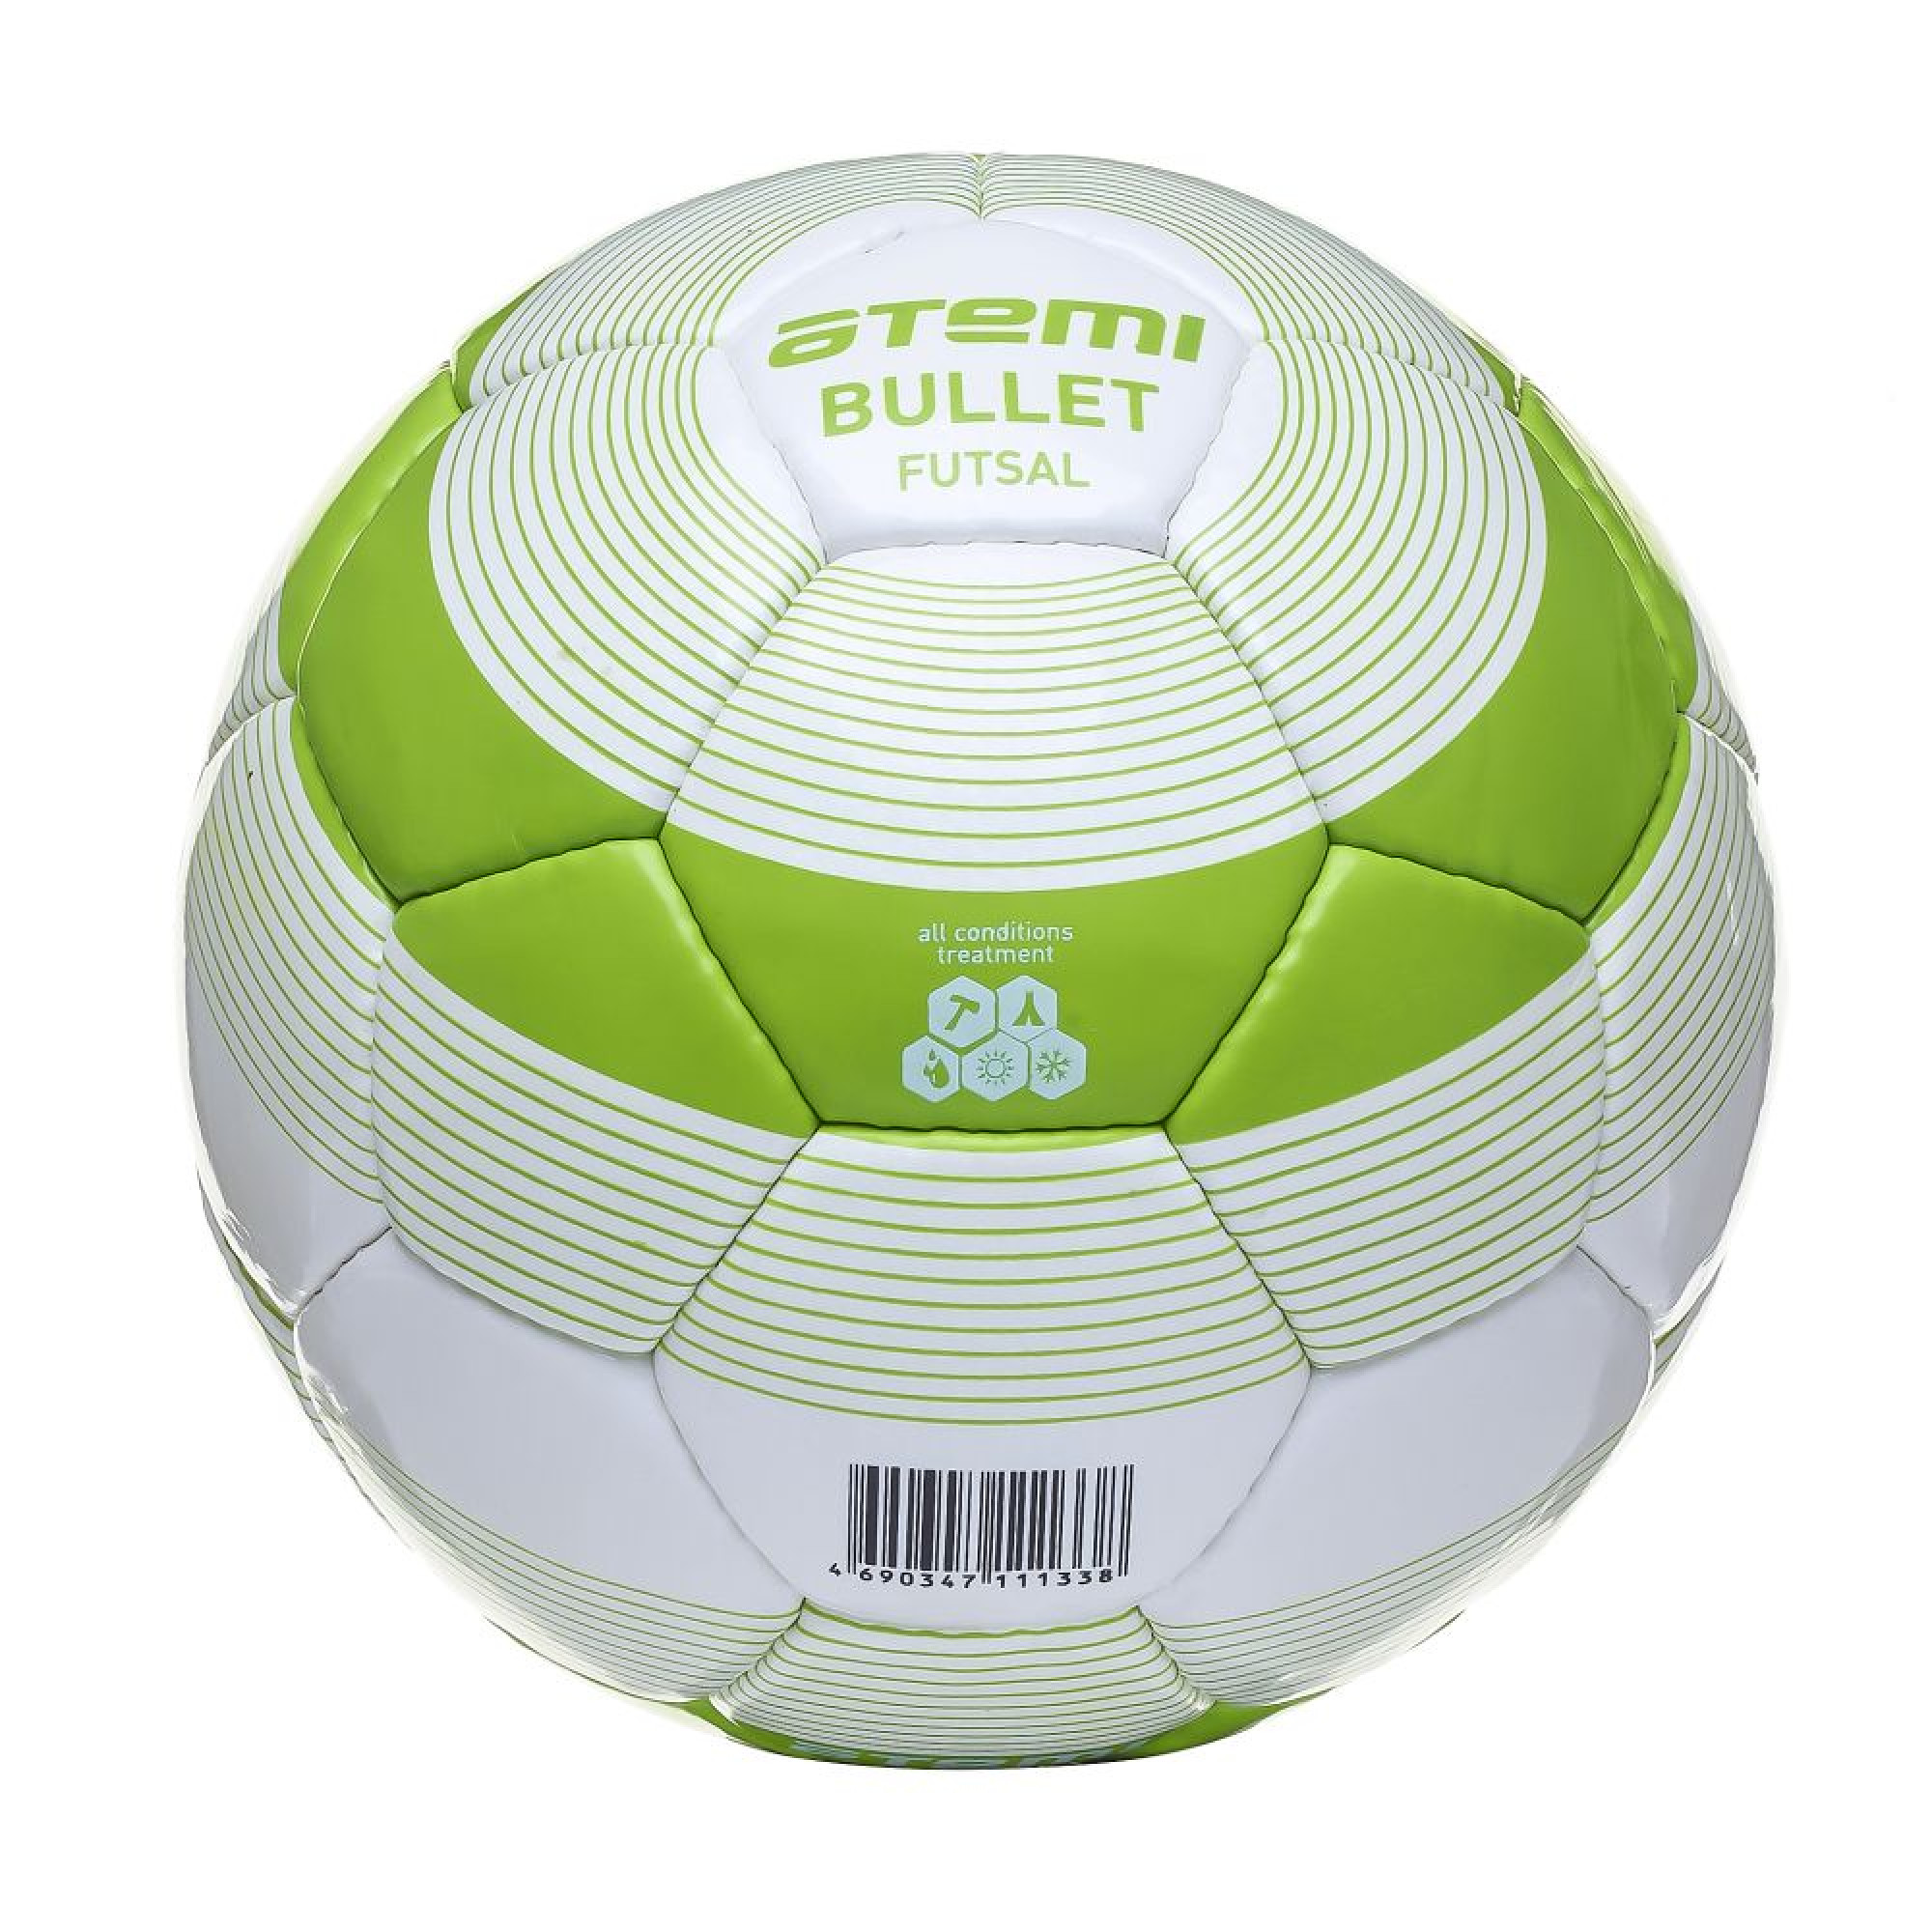 Мяч футбольный Atemi Bullet Futsal PU р.4